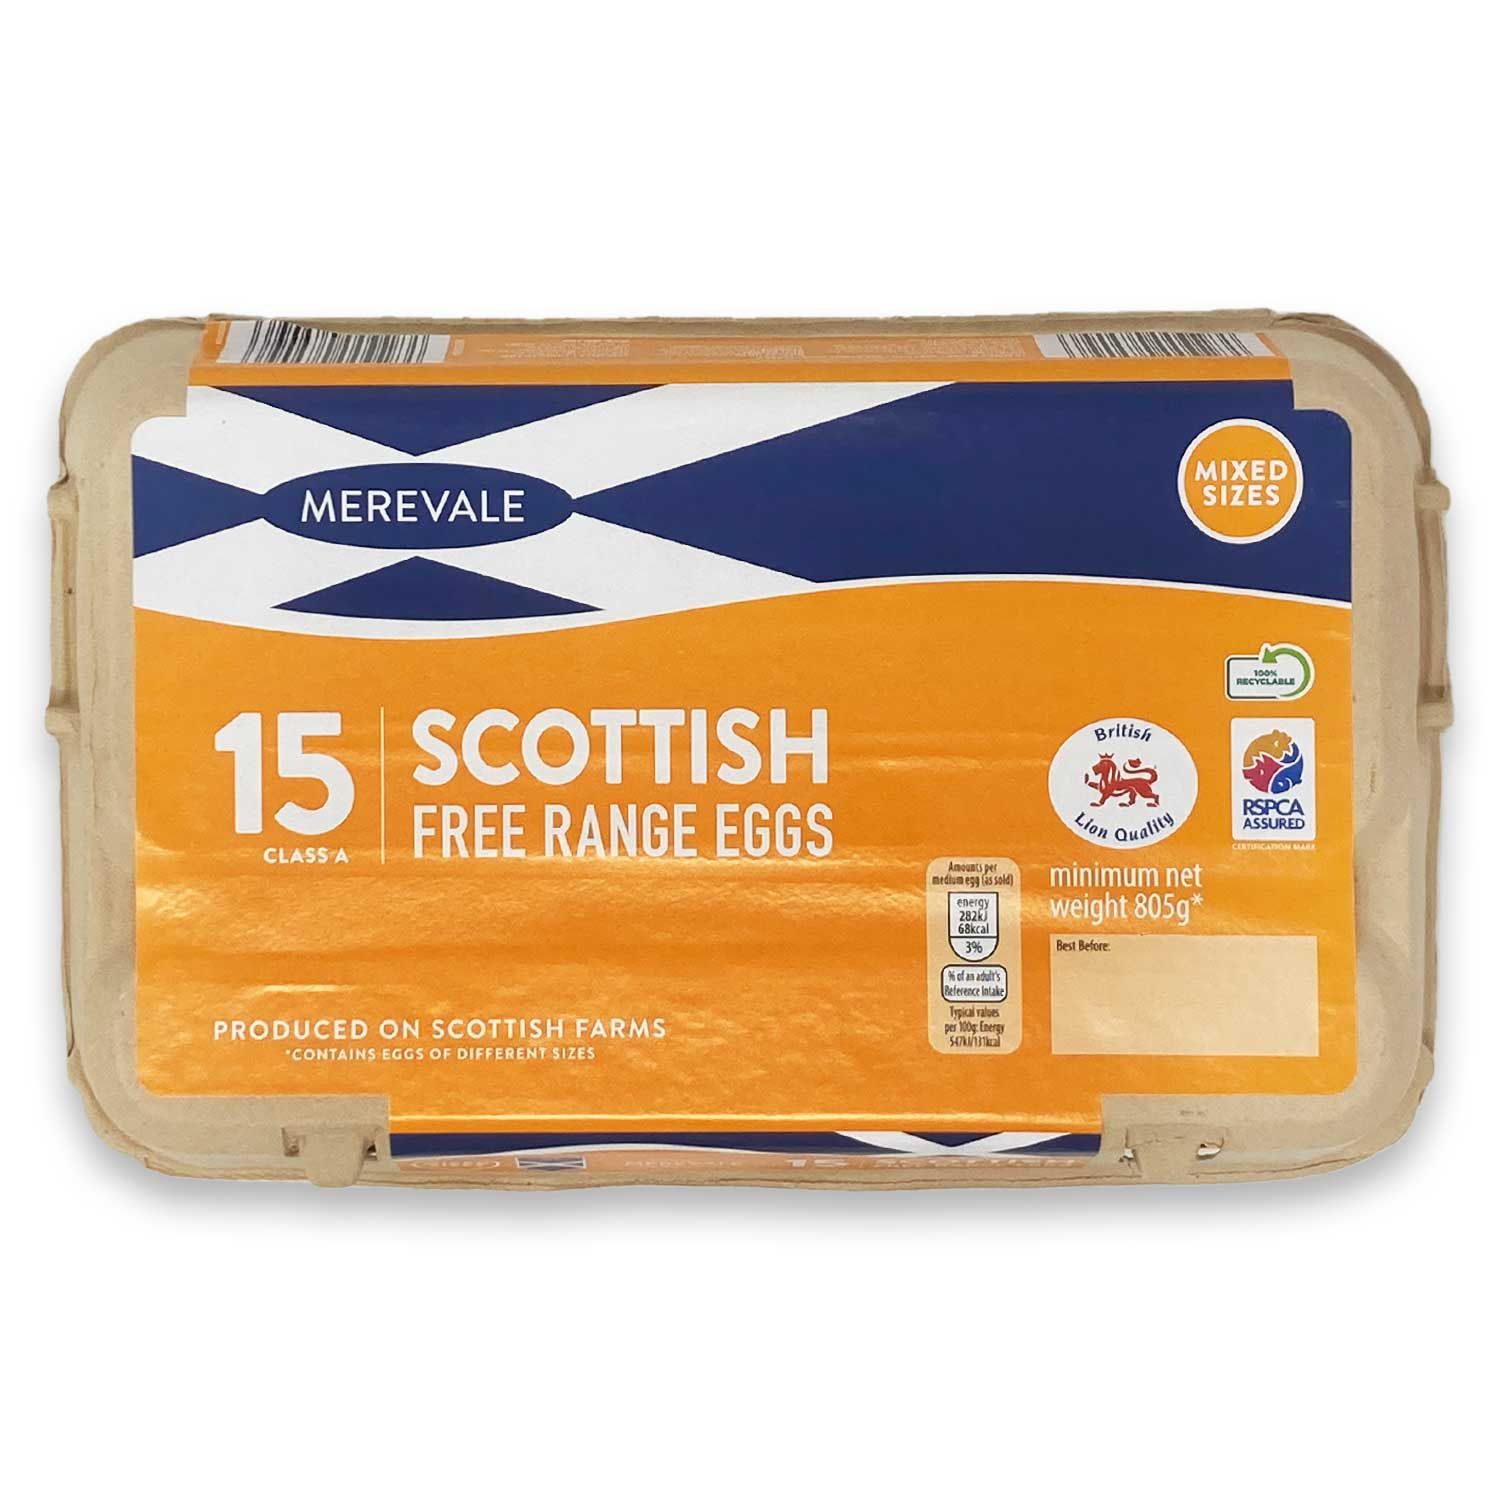 Merevale Mixed Weight Scottish Free Range Eggs 15 Pack